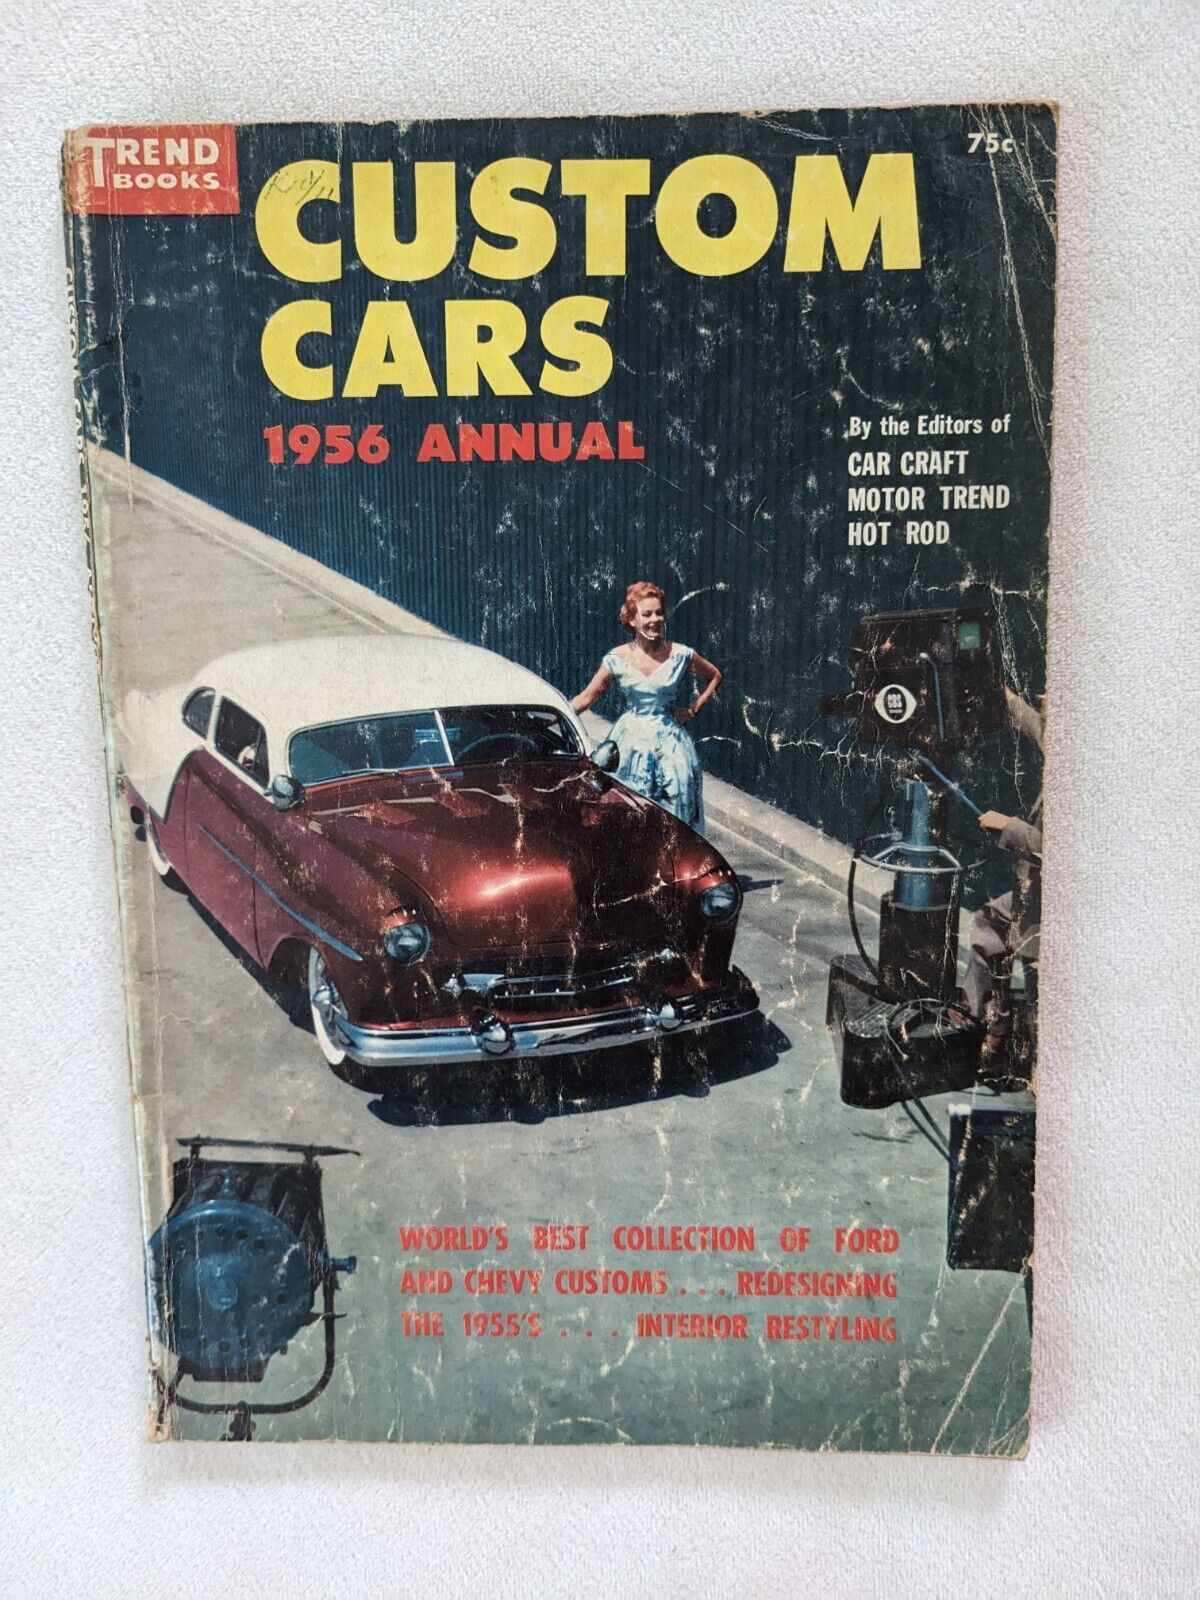 Motor Trend - Trend Books Custom Cars Magazine - 1956 Annual Edition - Vintage